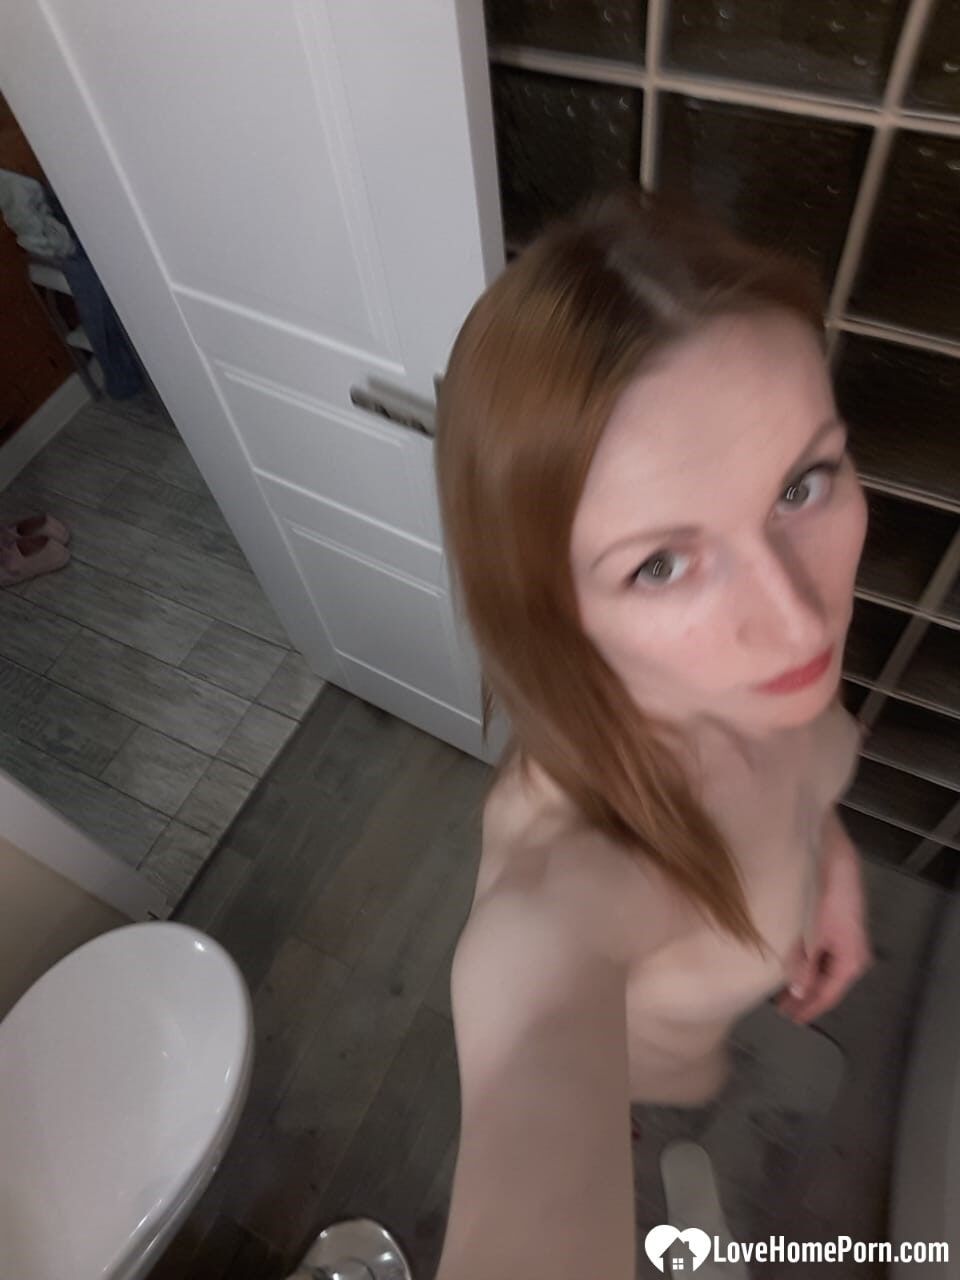 Skinny redhead girl posing in her bathroom naked #22